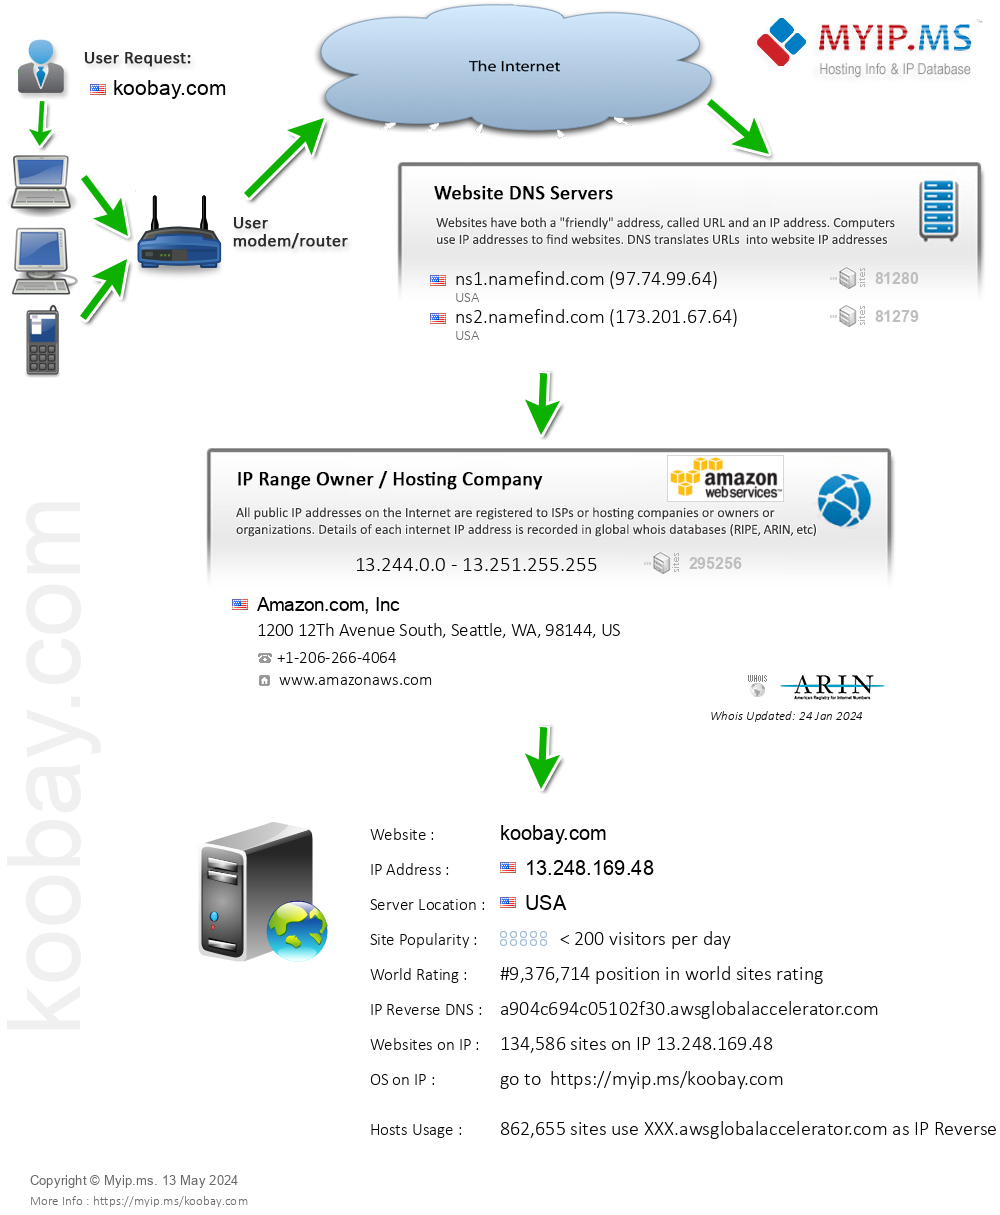 Koobay.com - Website Hosting Visual IP Diagram